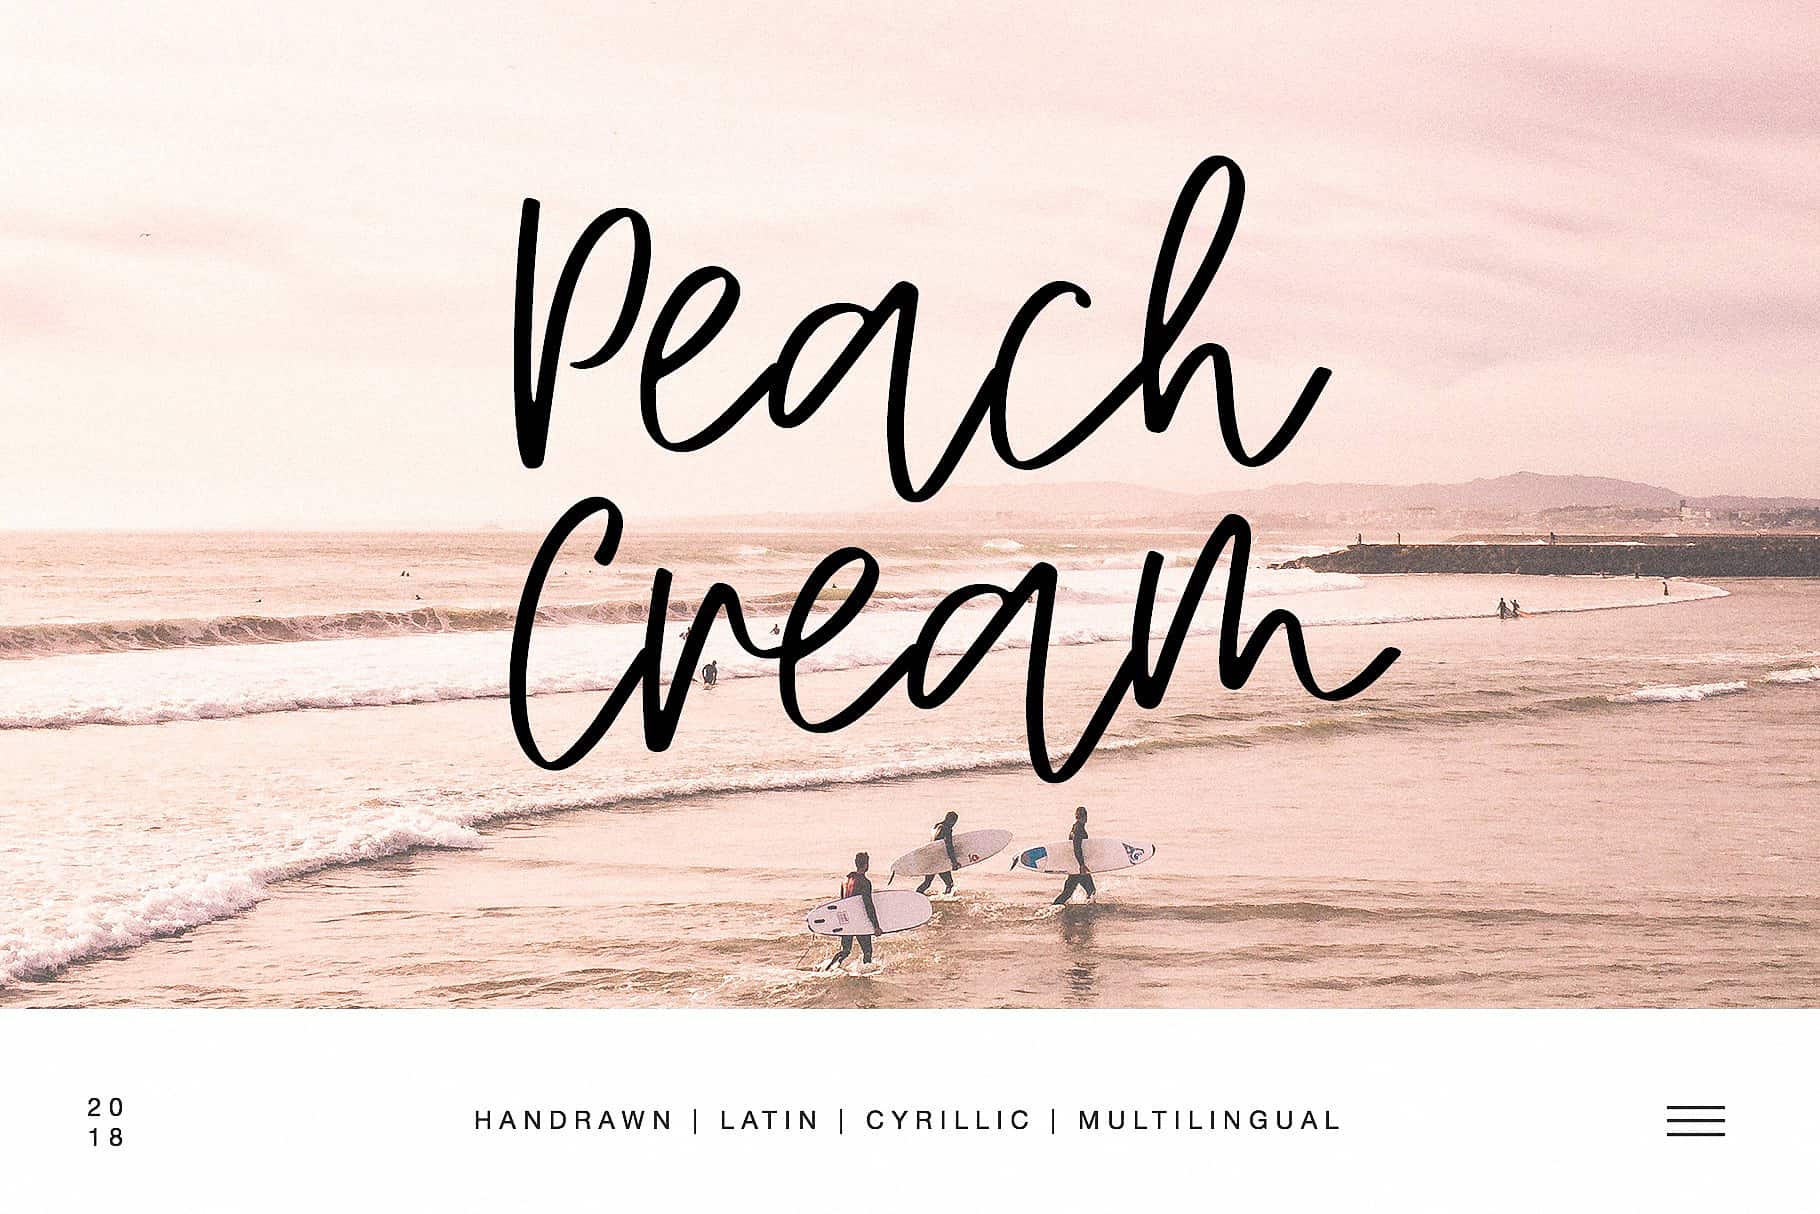 Peach Cream Latin & Cyrillic Font Free Download